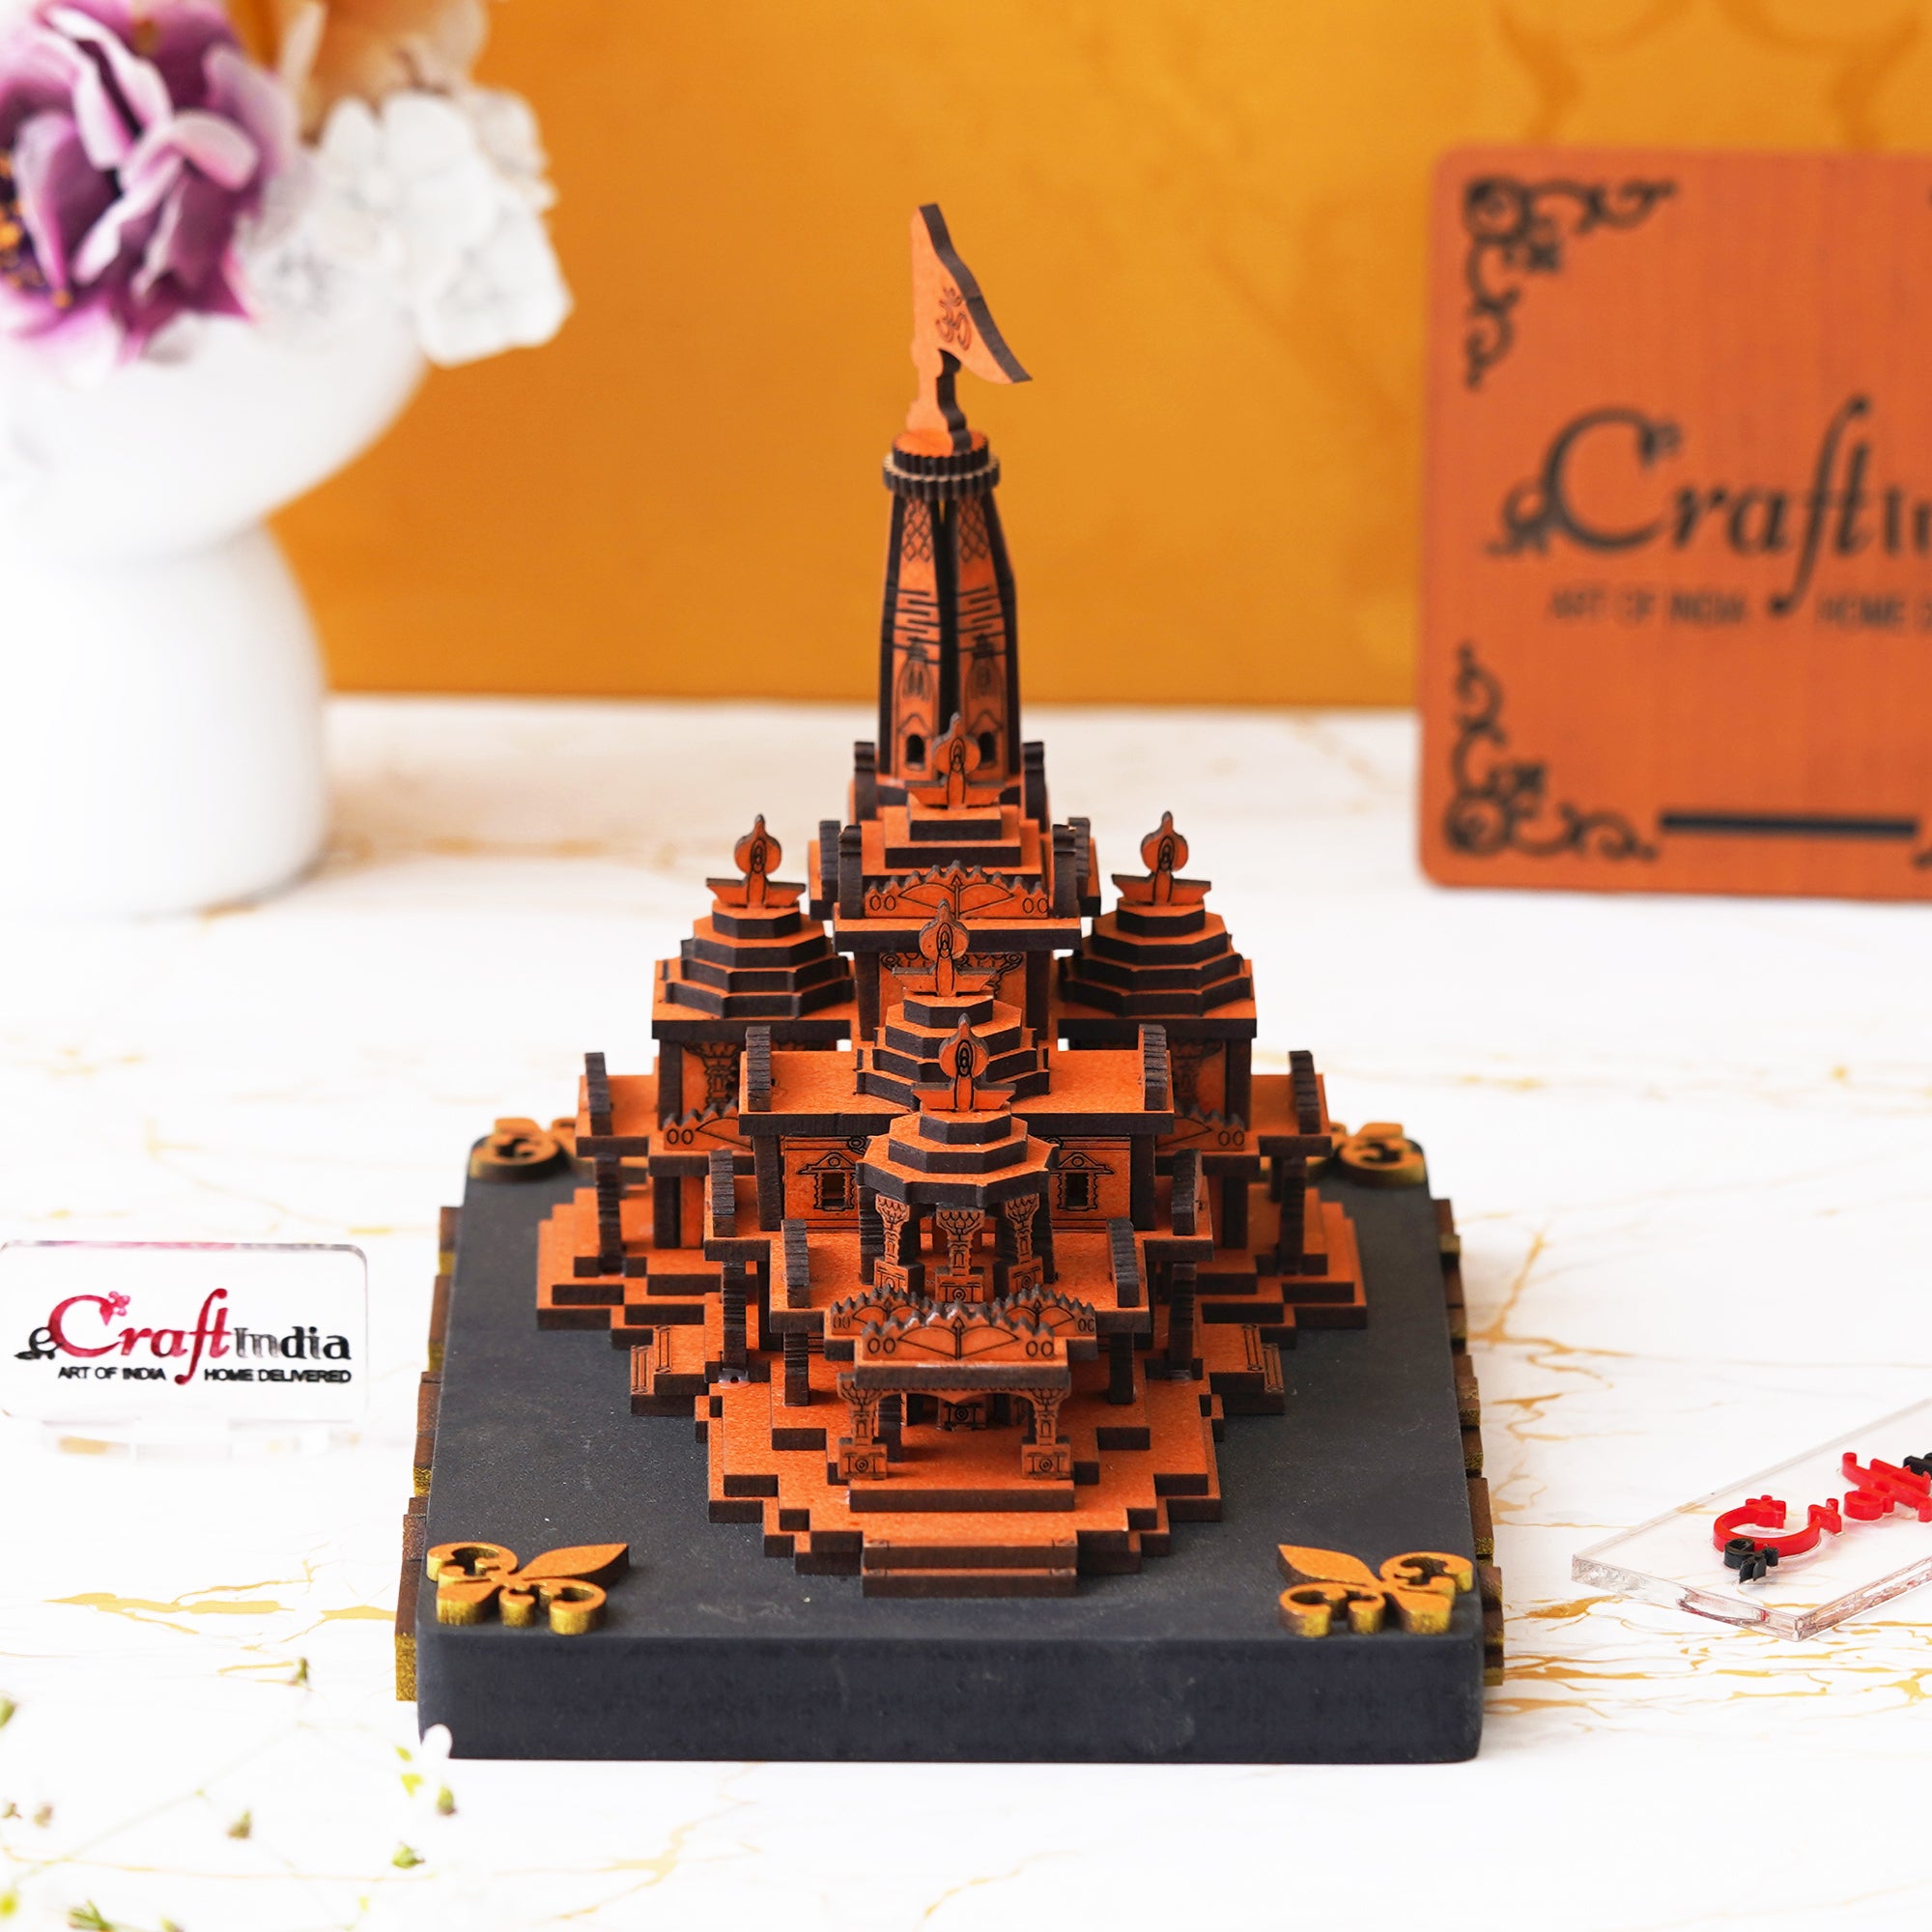 eCraftIndia Shri Ram Mandir Ayodhya Model - Wooden MDF Craftsmanship Authentic Designer Temple - Ideal for Home Temple, Decor, and Spiritual Gifting (Orange, Gold) 5